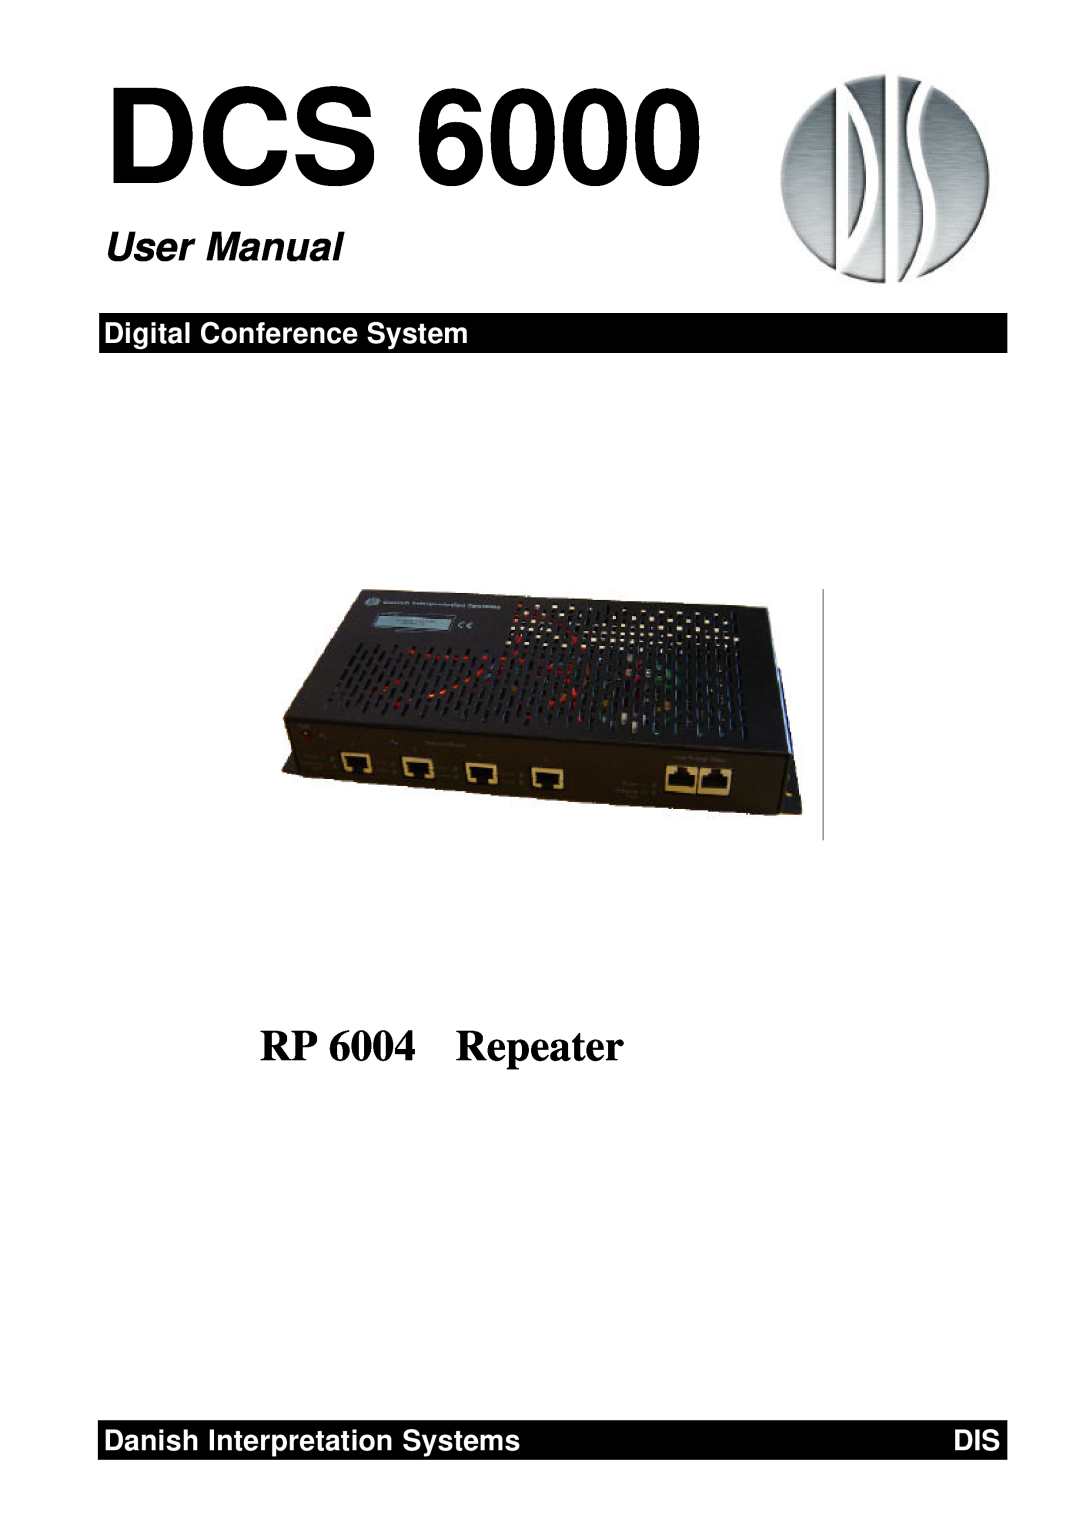 Listen Technologies user manual Digital Conference System, Danish Interpretation Systems, RP 6004 Repeater, User Manual 